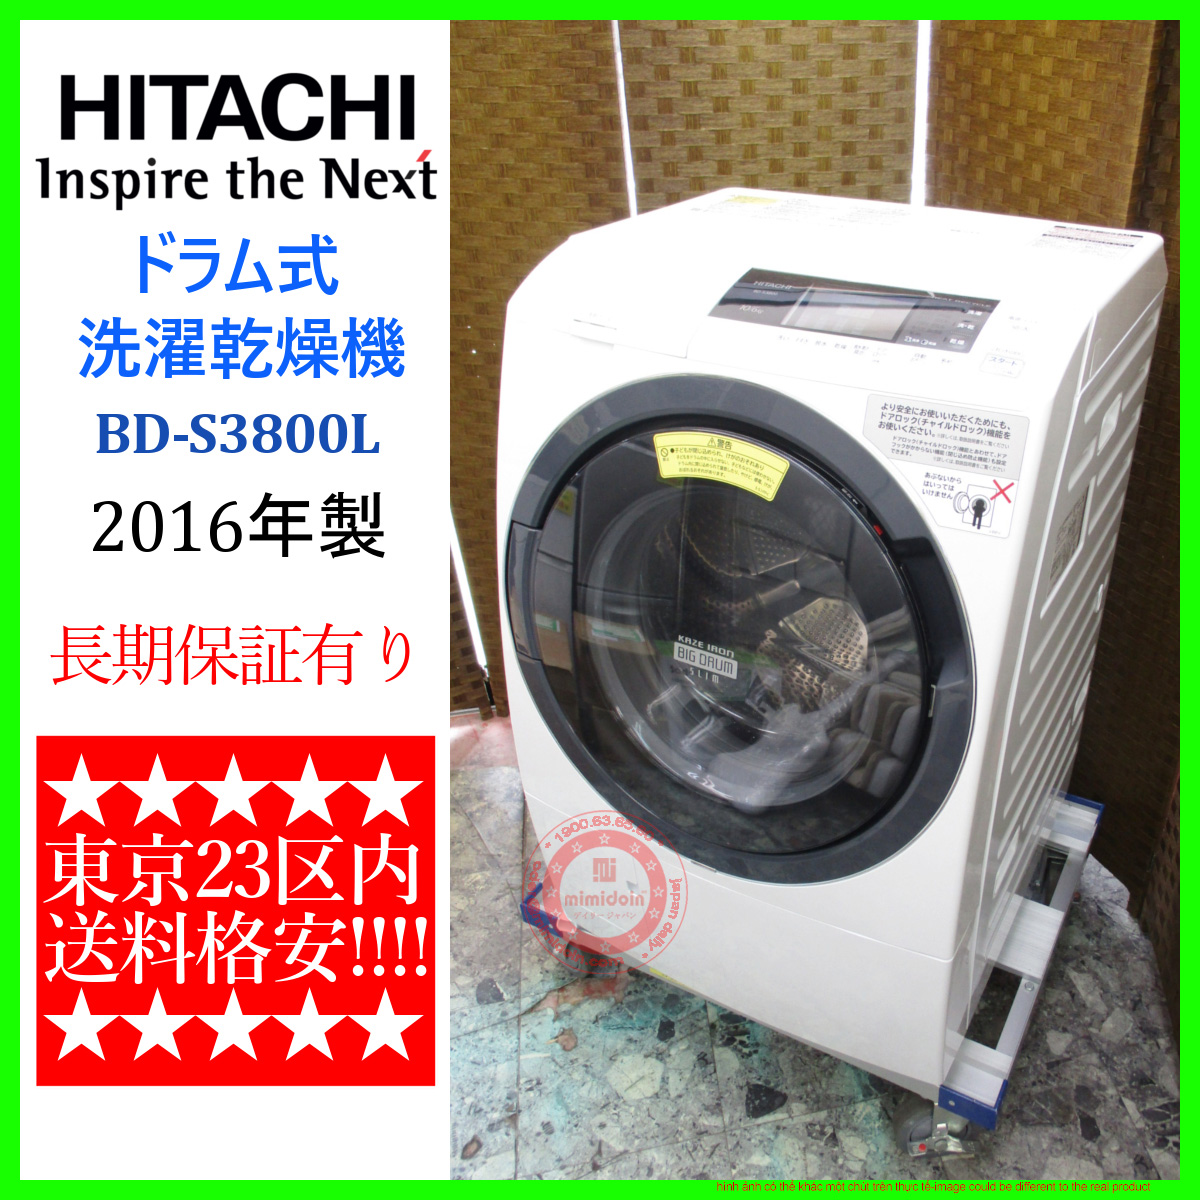 Máy giặt Hitachi BD-S3800L